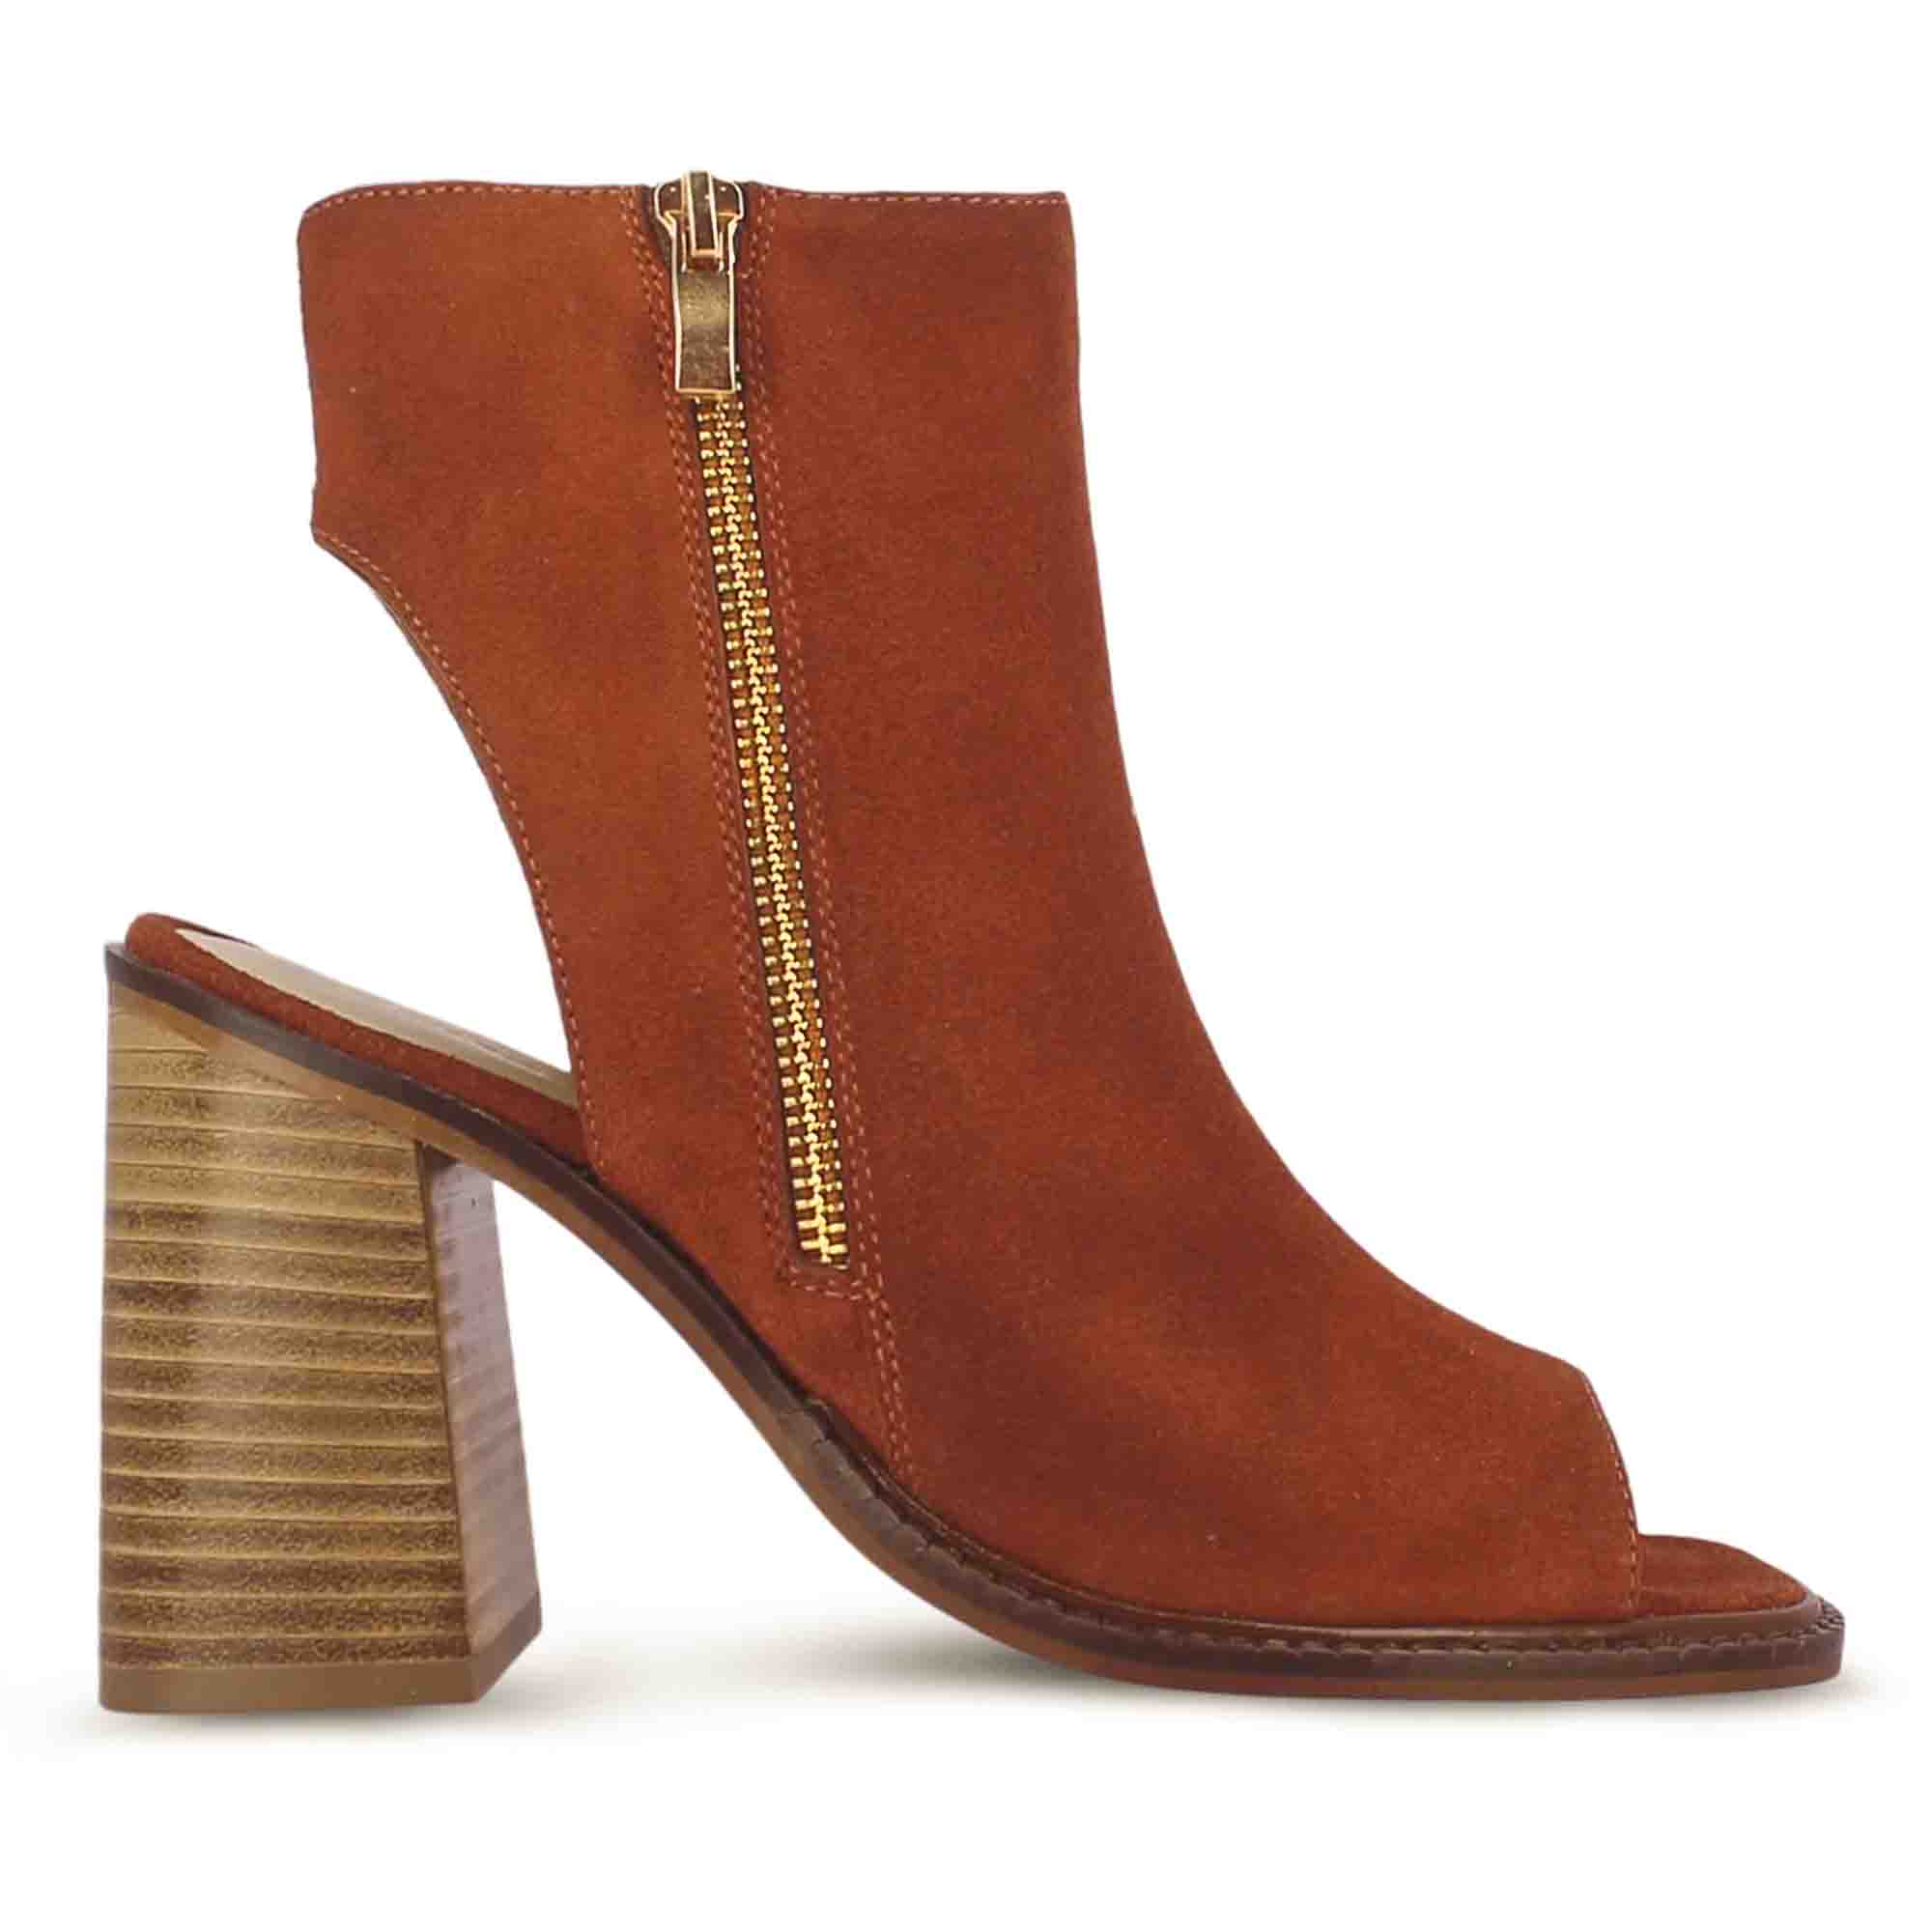 ASOS DESIGN Nura strappy block heeled sandals in camel | ASOS